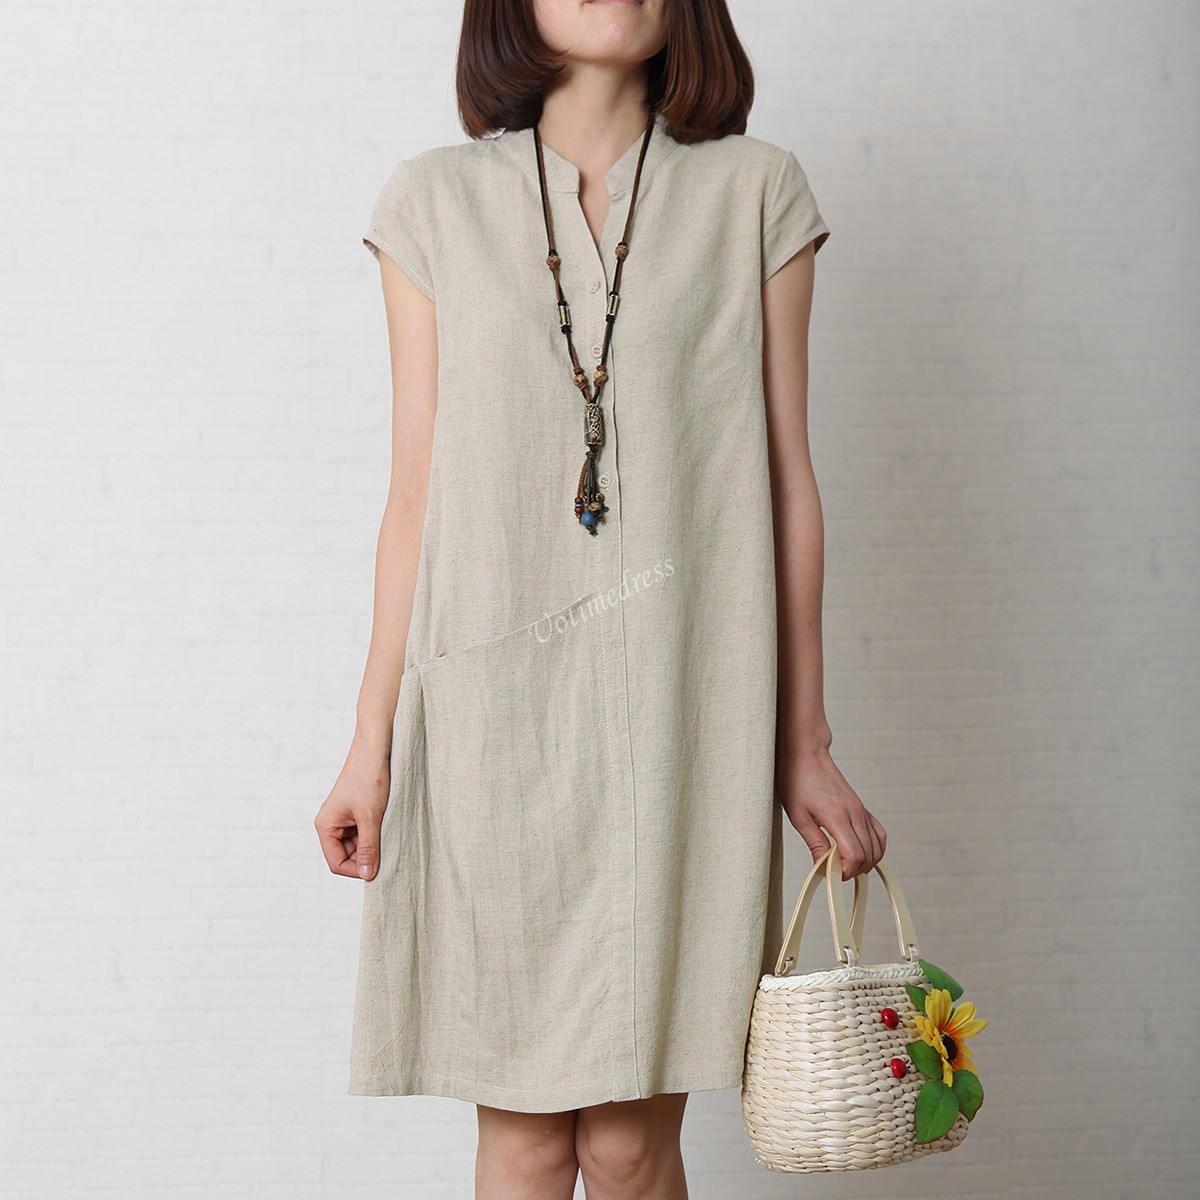 Rice Women's Sundress Loose Cotton Linen Dress V-neck 4 Colors